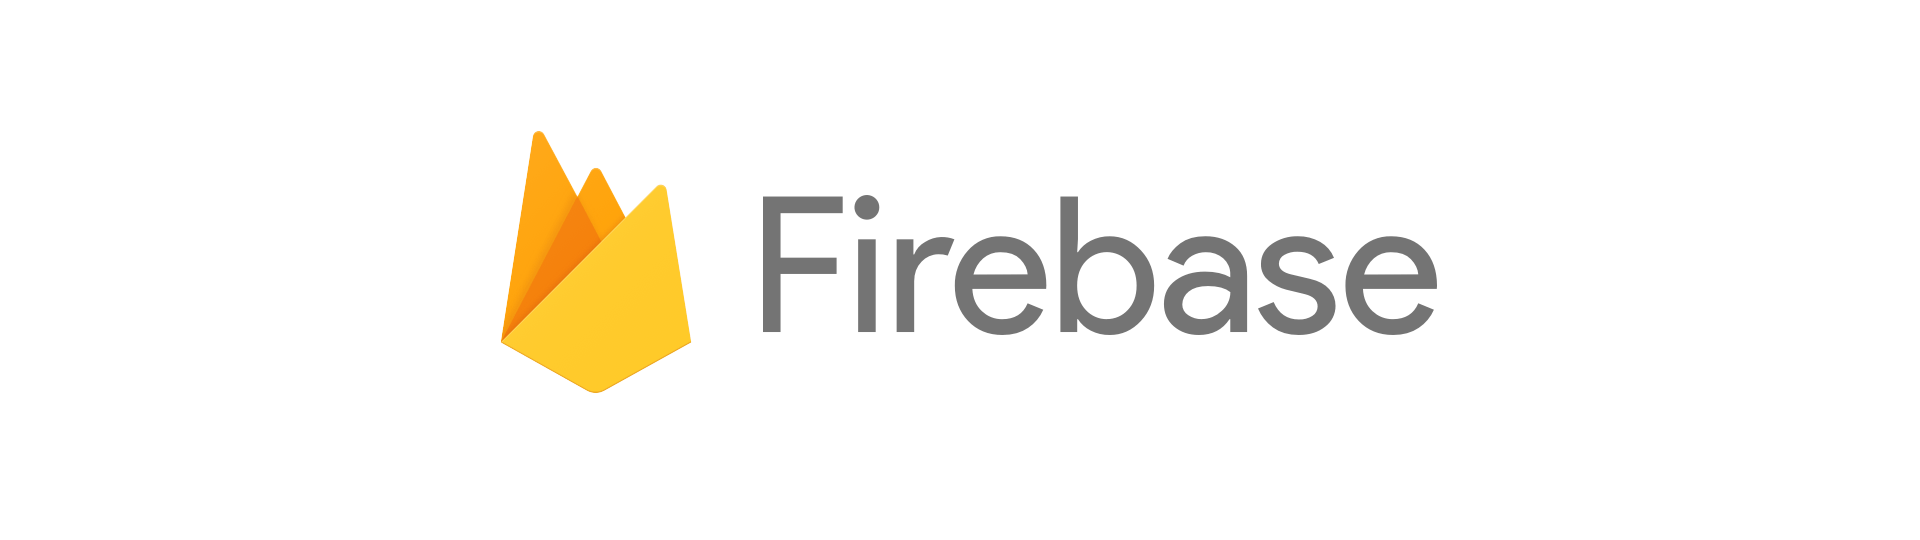 firebase-site.png